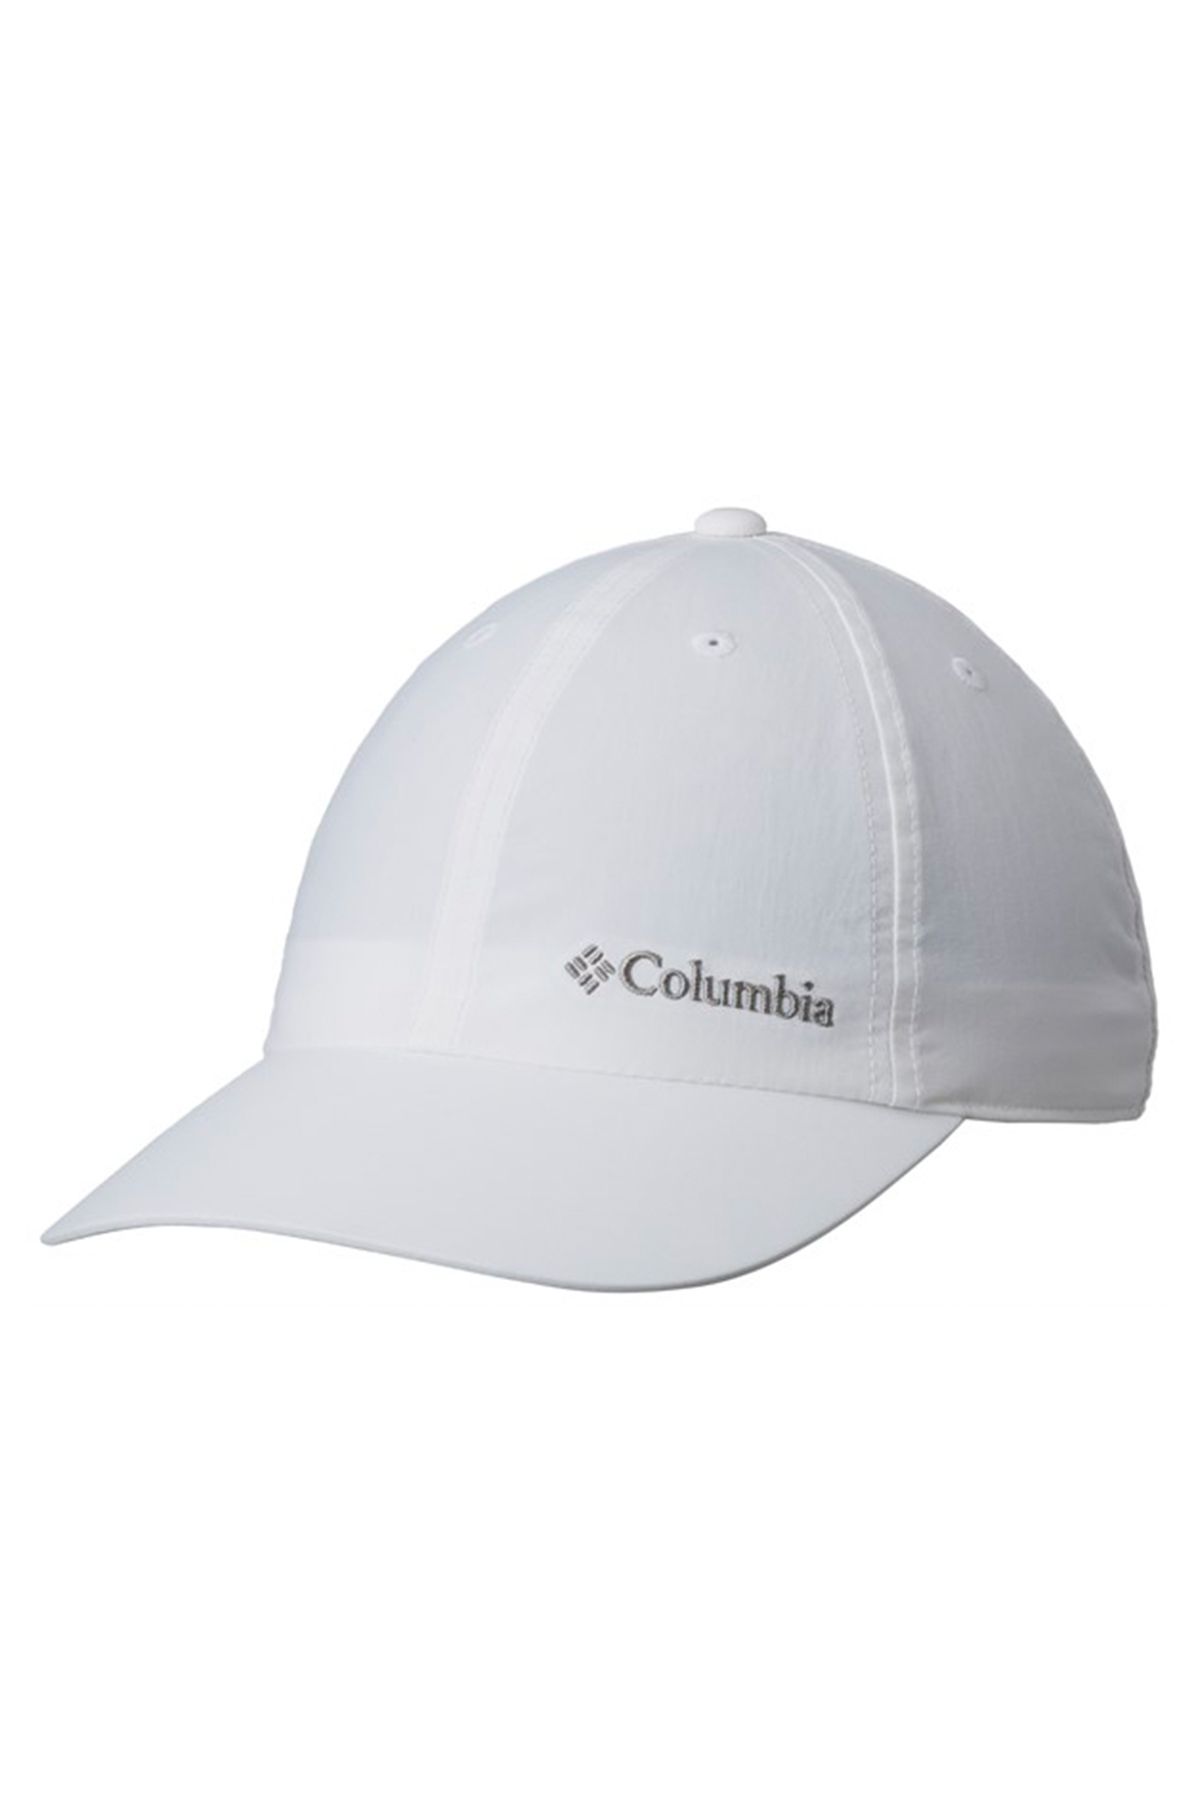 Columbia Unisex Beyaz Şapka 1819641100-100